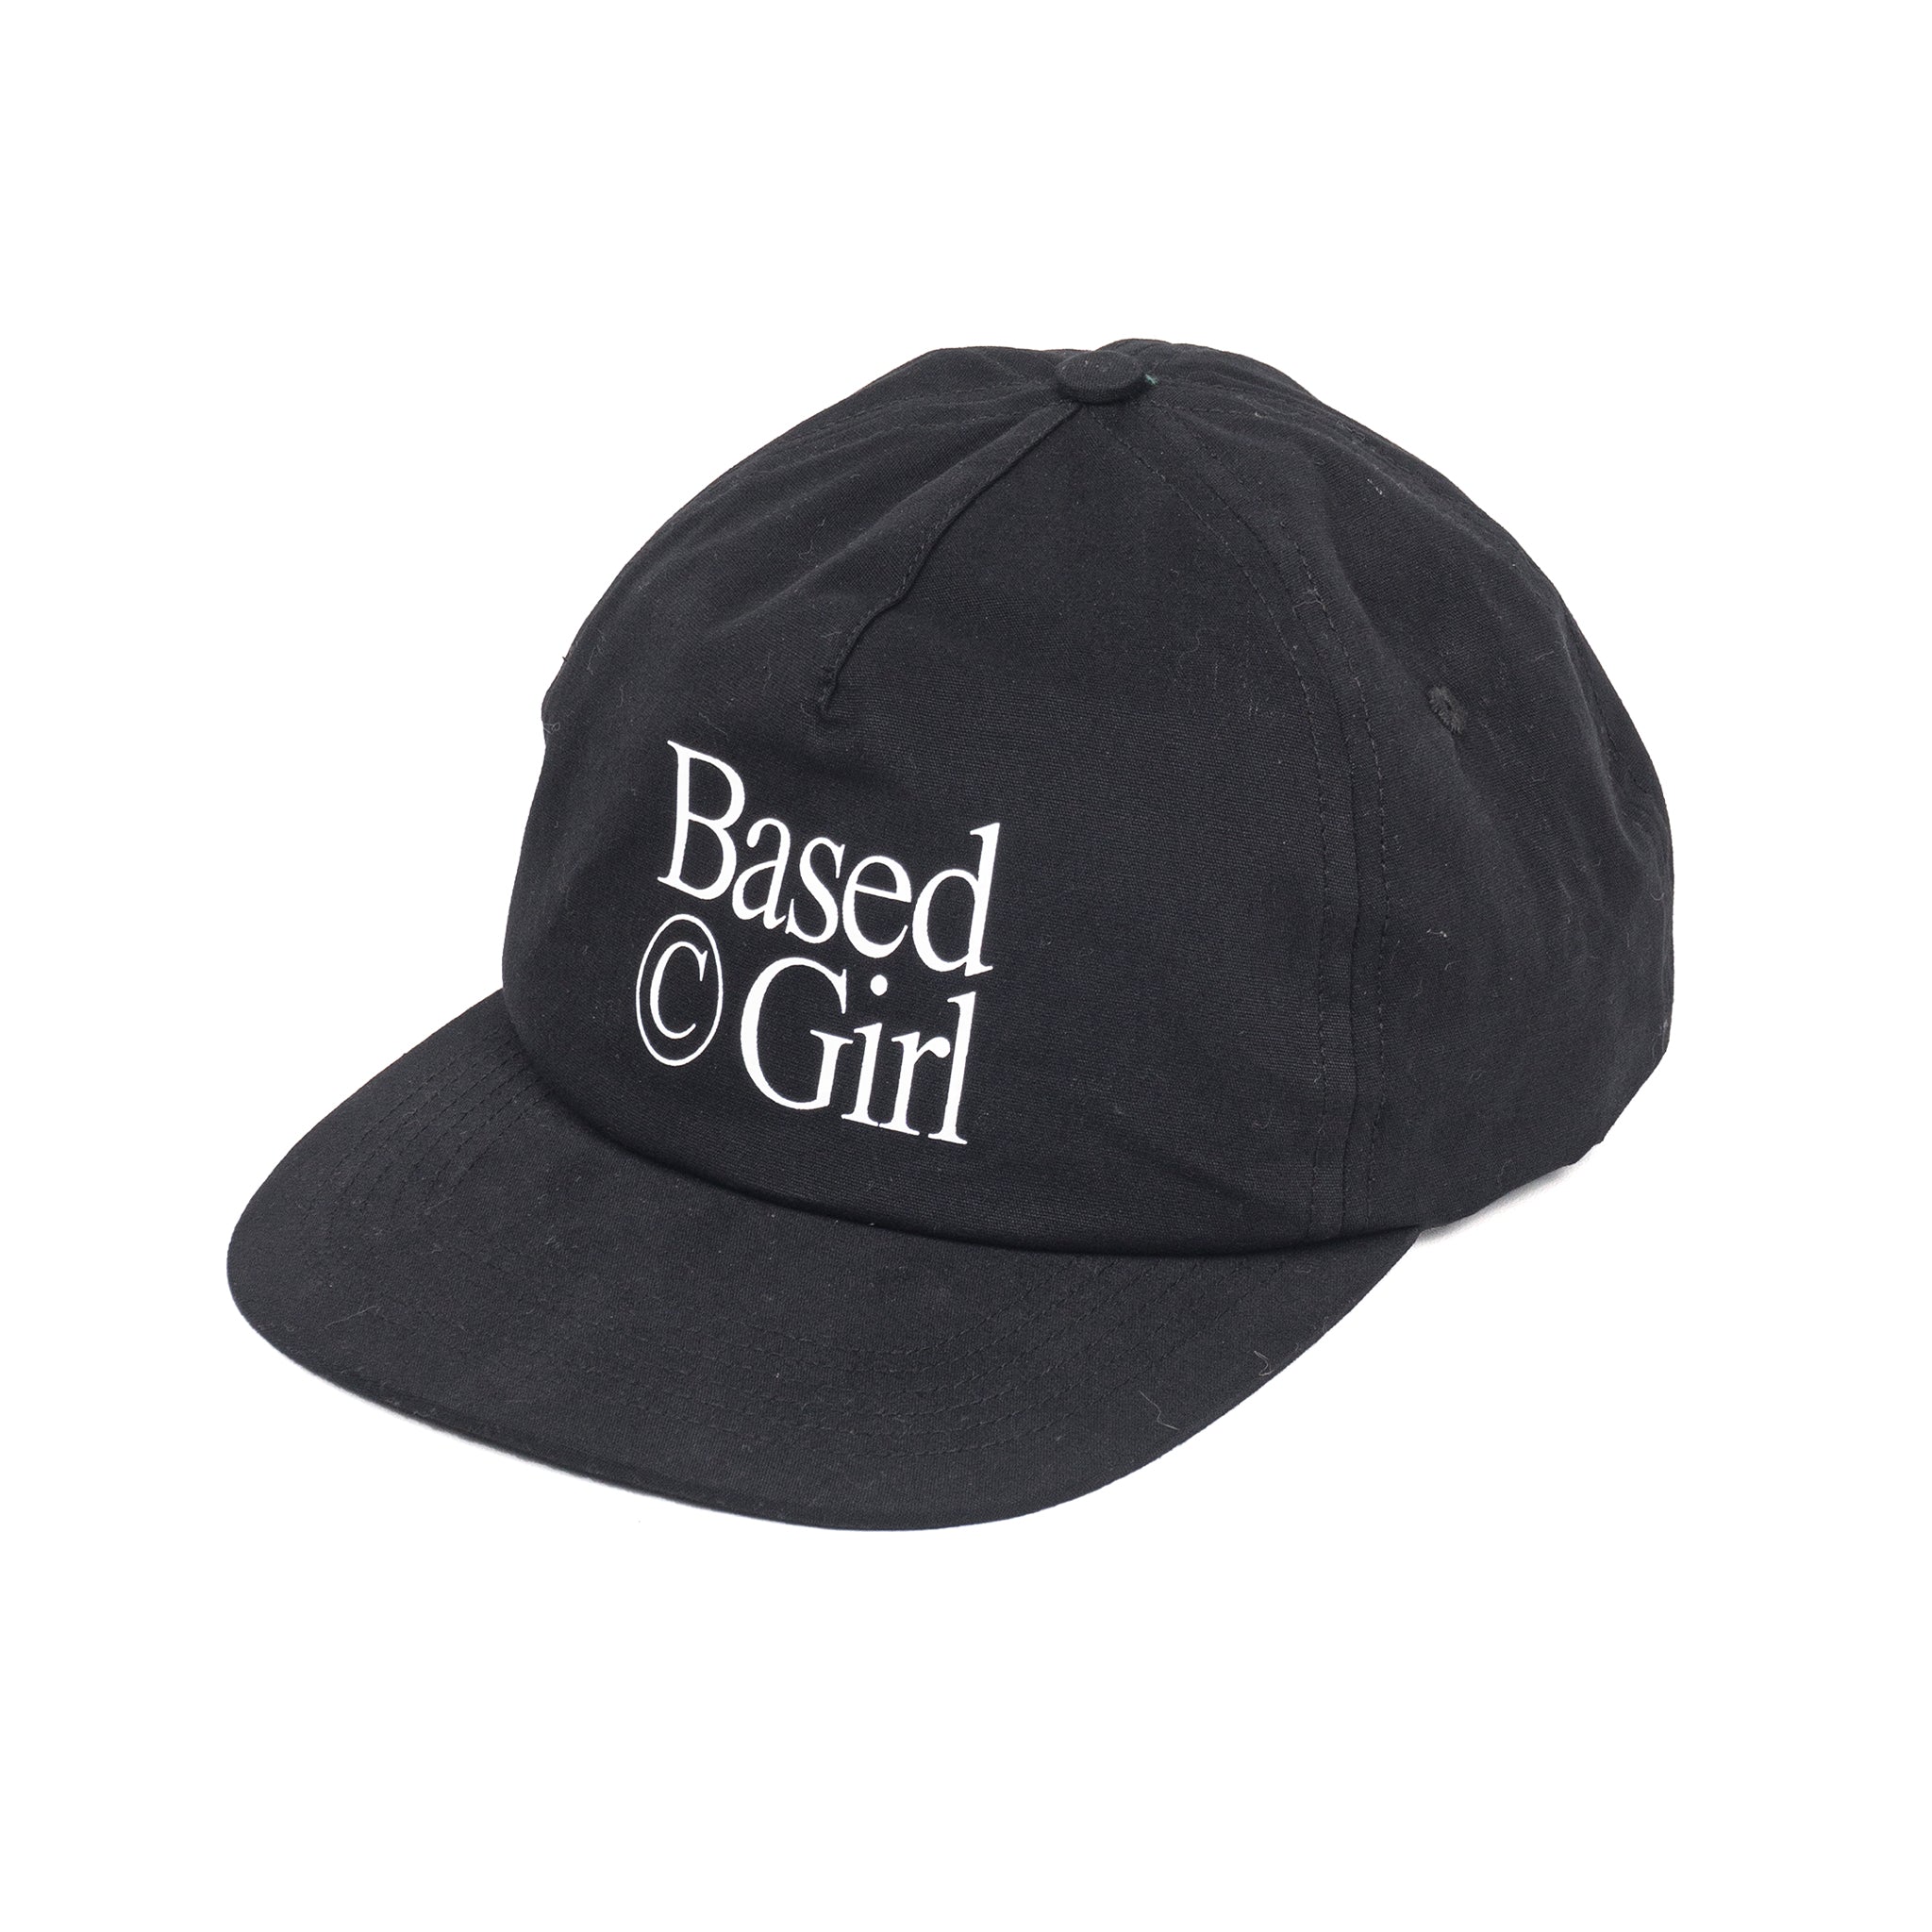 GURL BLACK BALL CAP